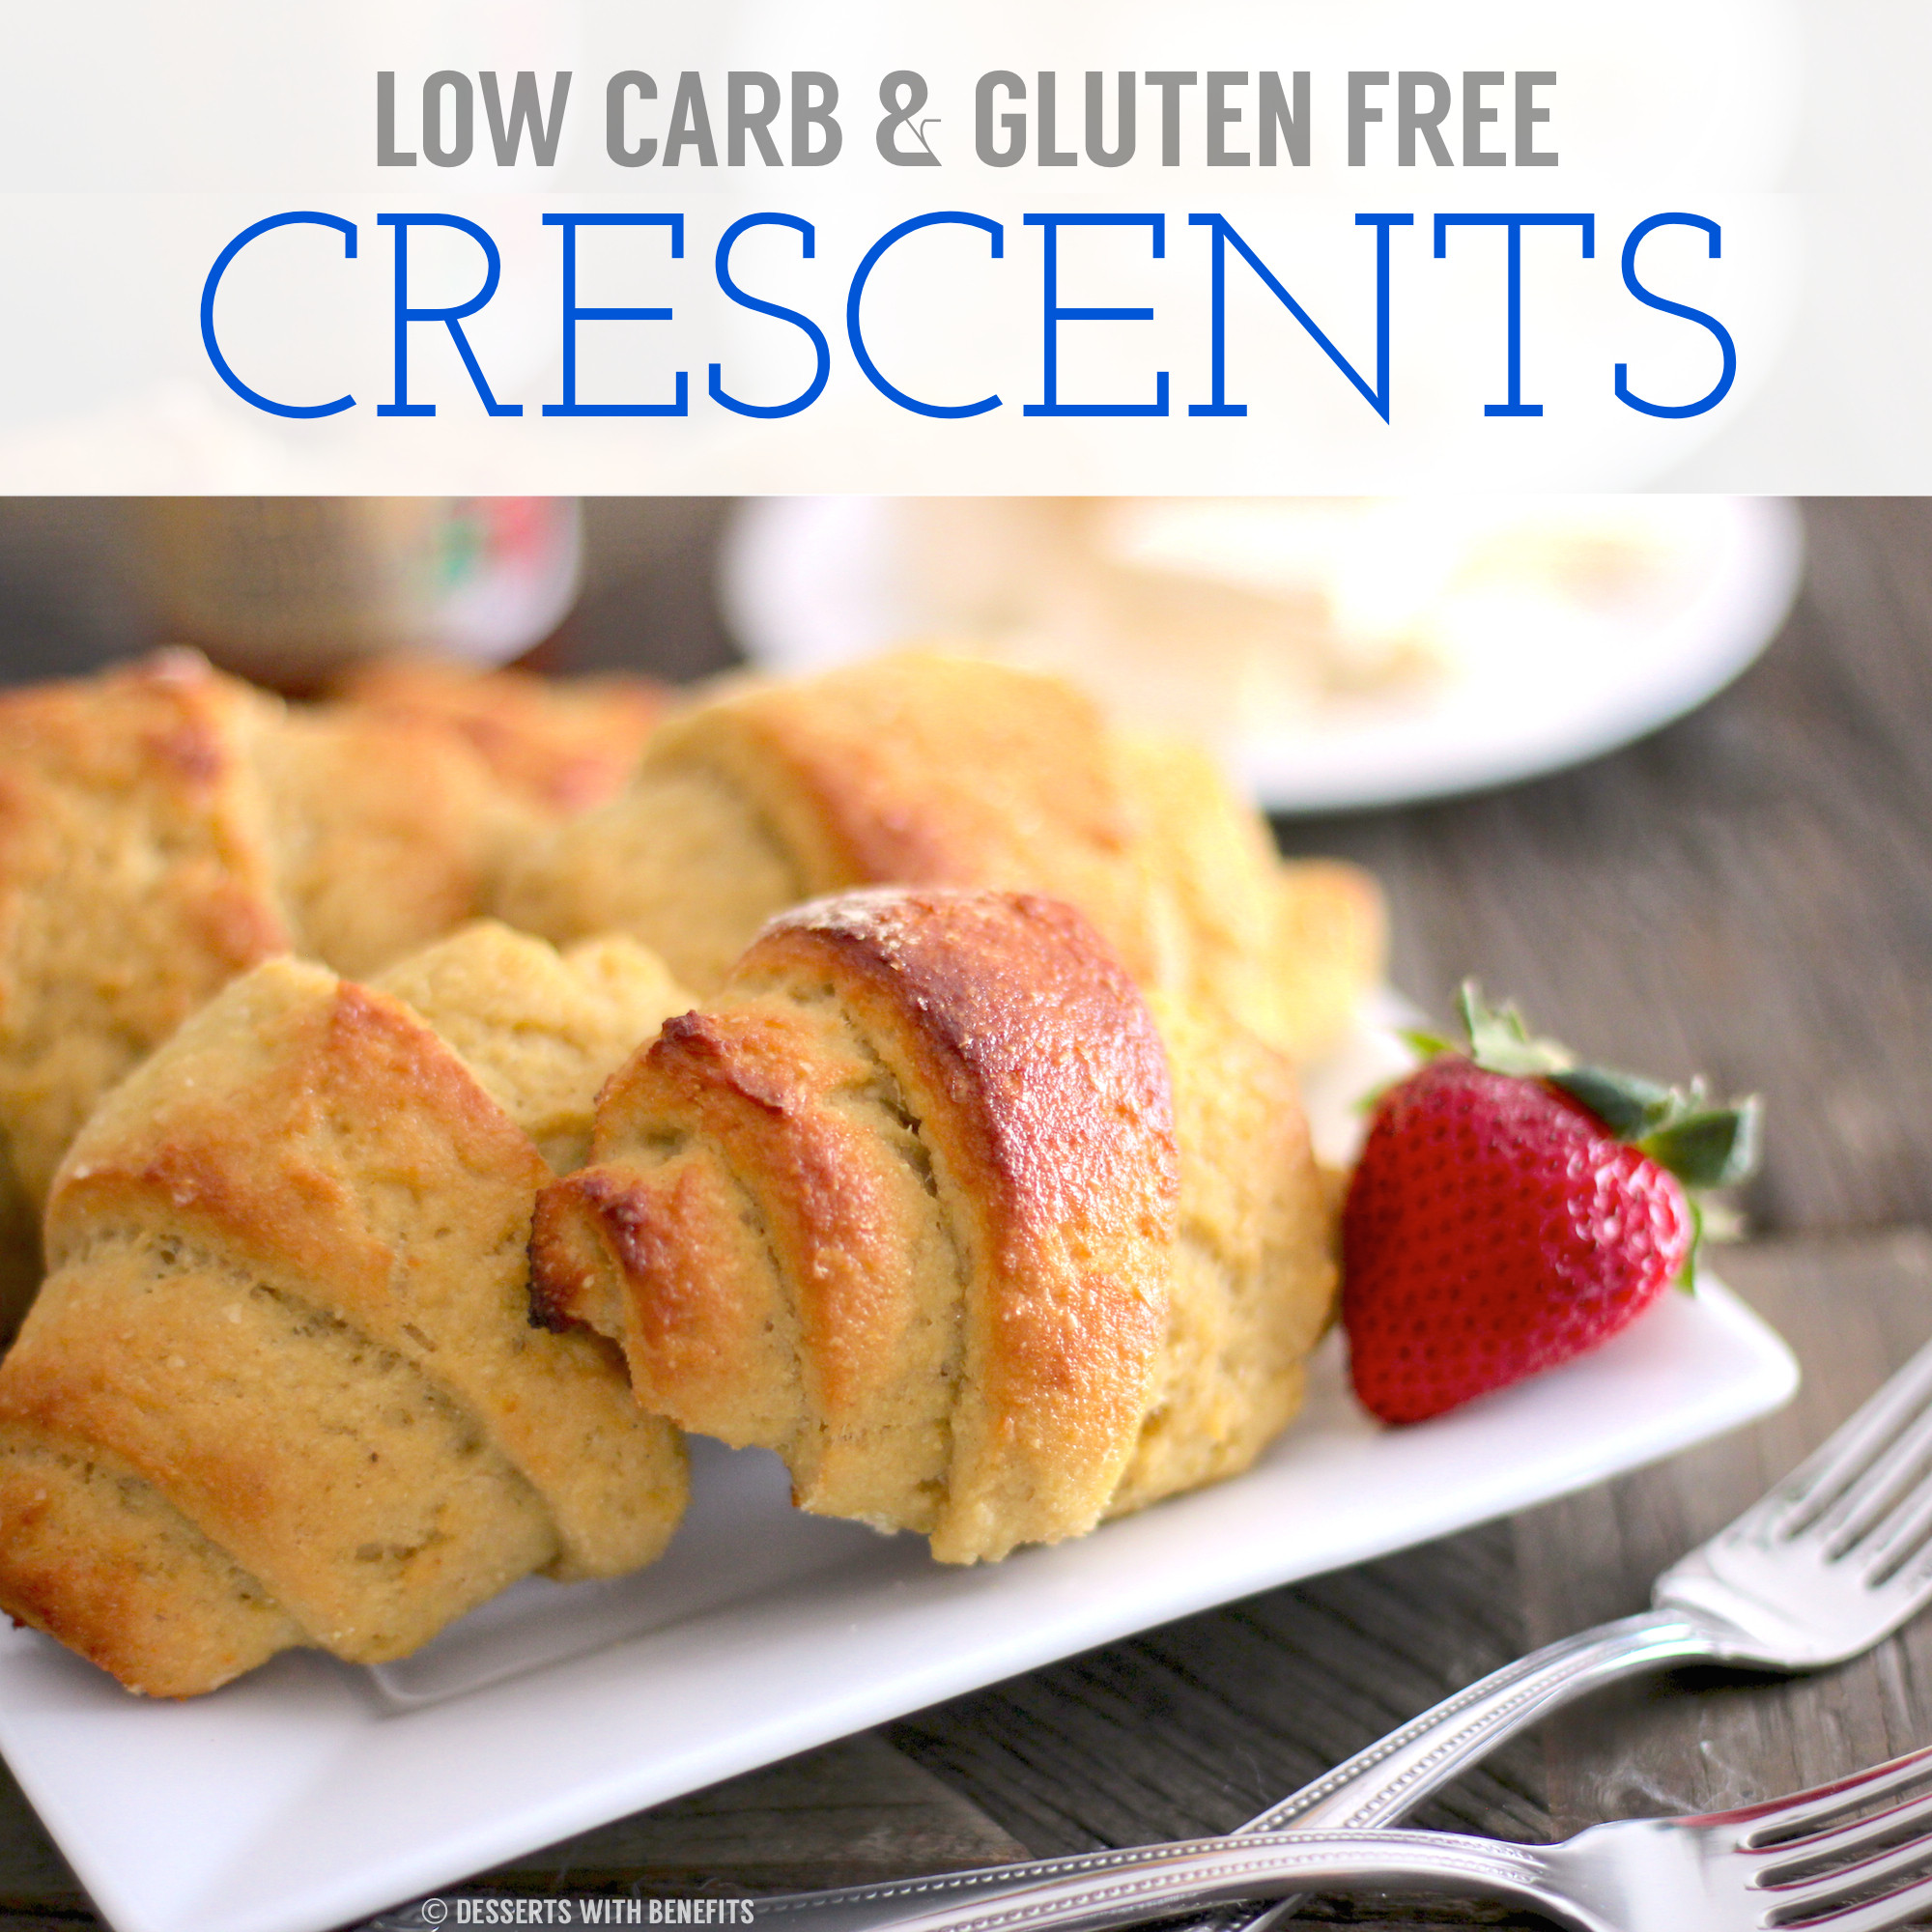 Low Sugar Low Fat Desserts
 Healthy Homemade Gluten Free Crescent Rolls